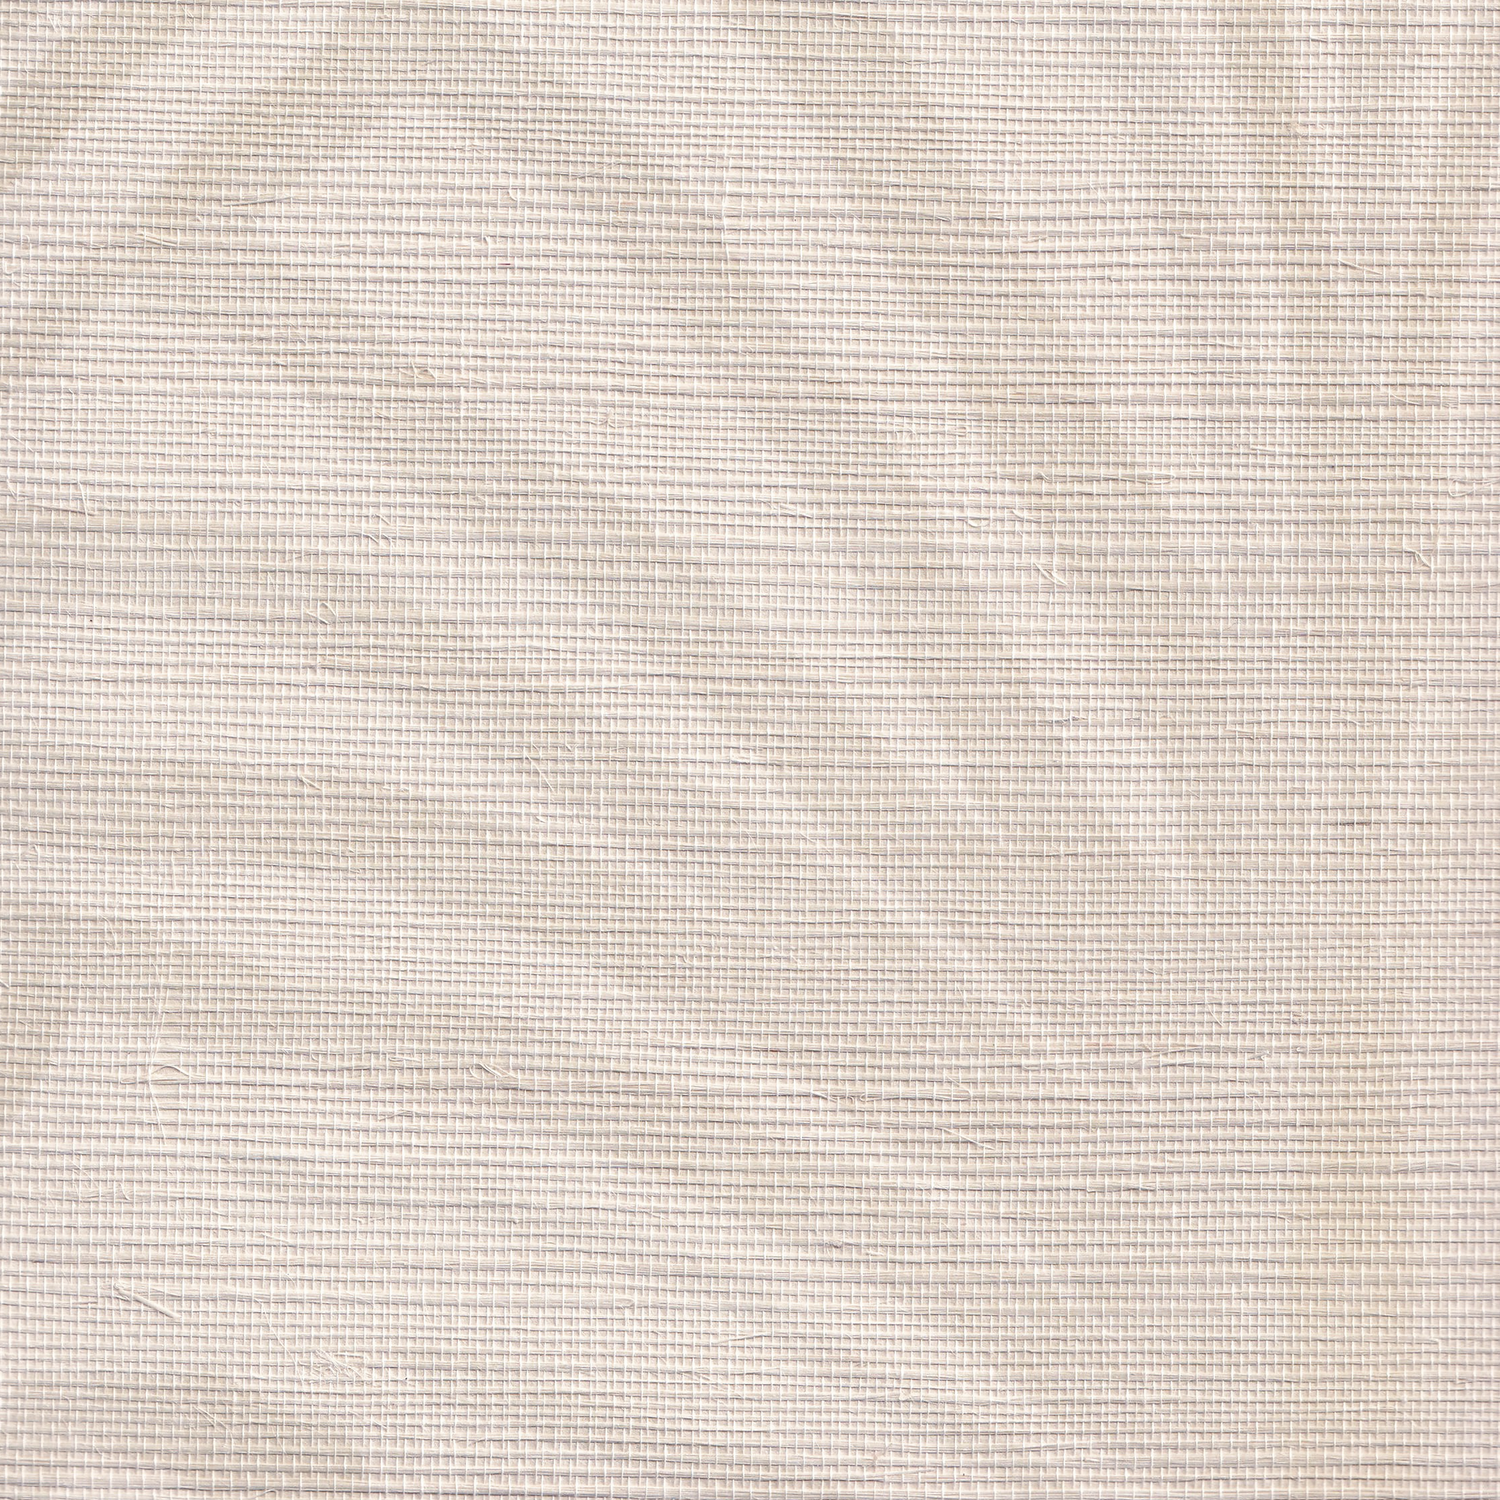 Beige Palm Printed Grasscloth Wallpaper Swatch